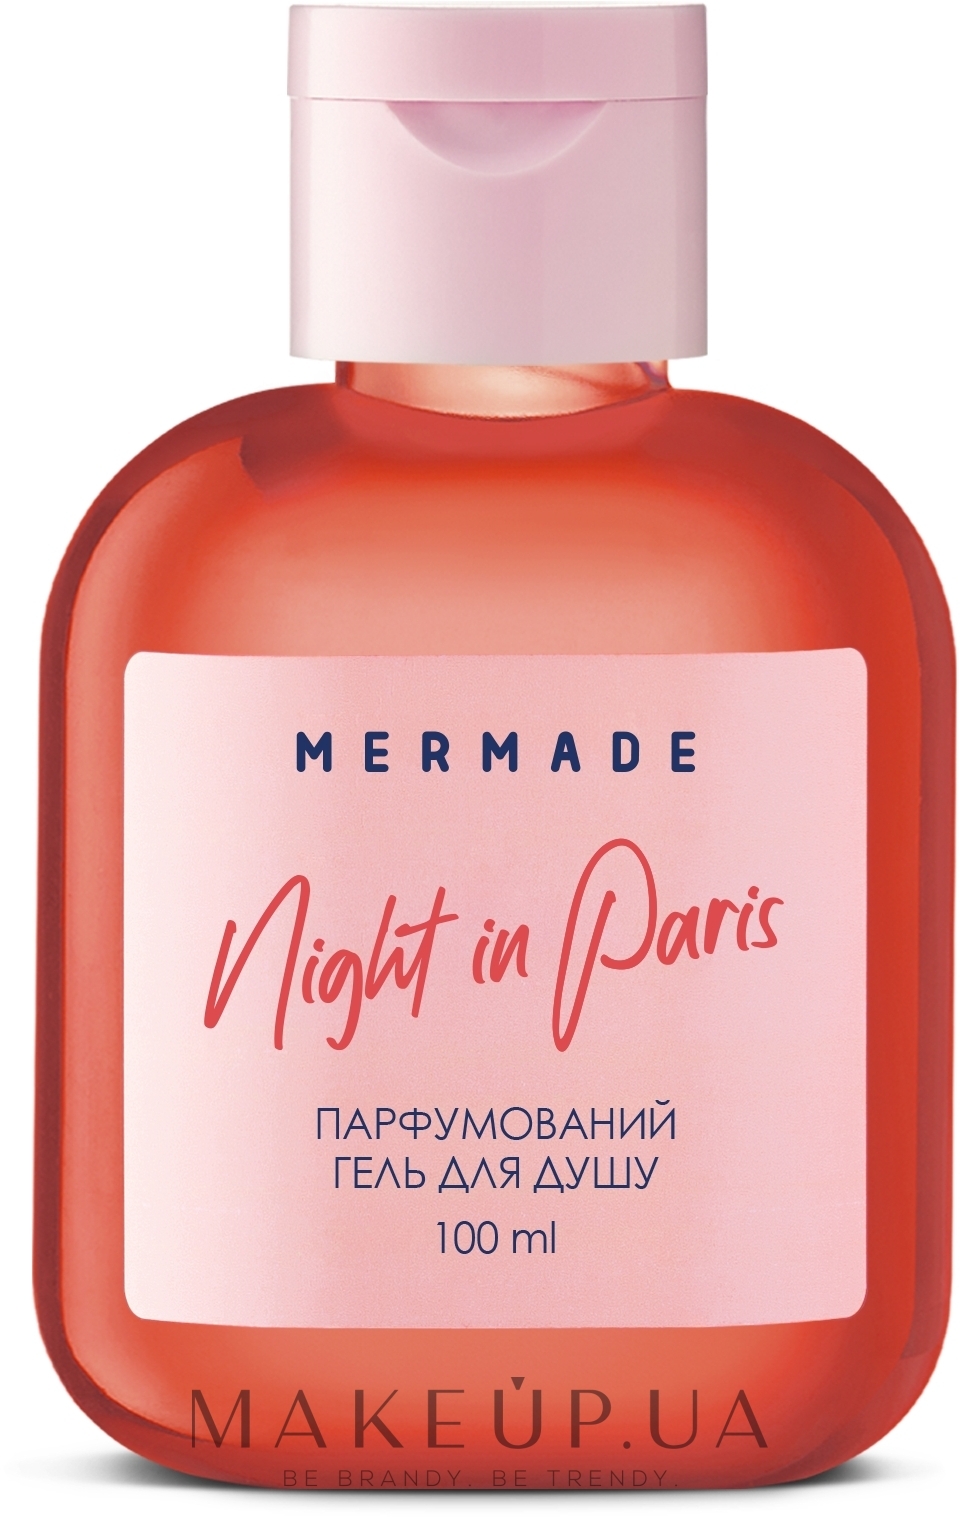 Mermade Night In Paris - Парфюмированный гель для душа — фото 100ml